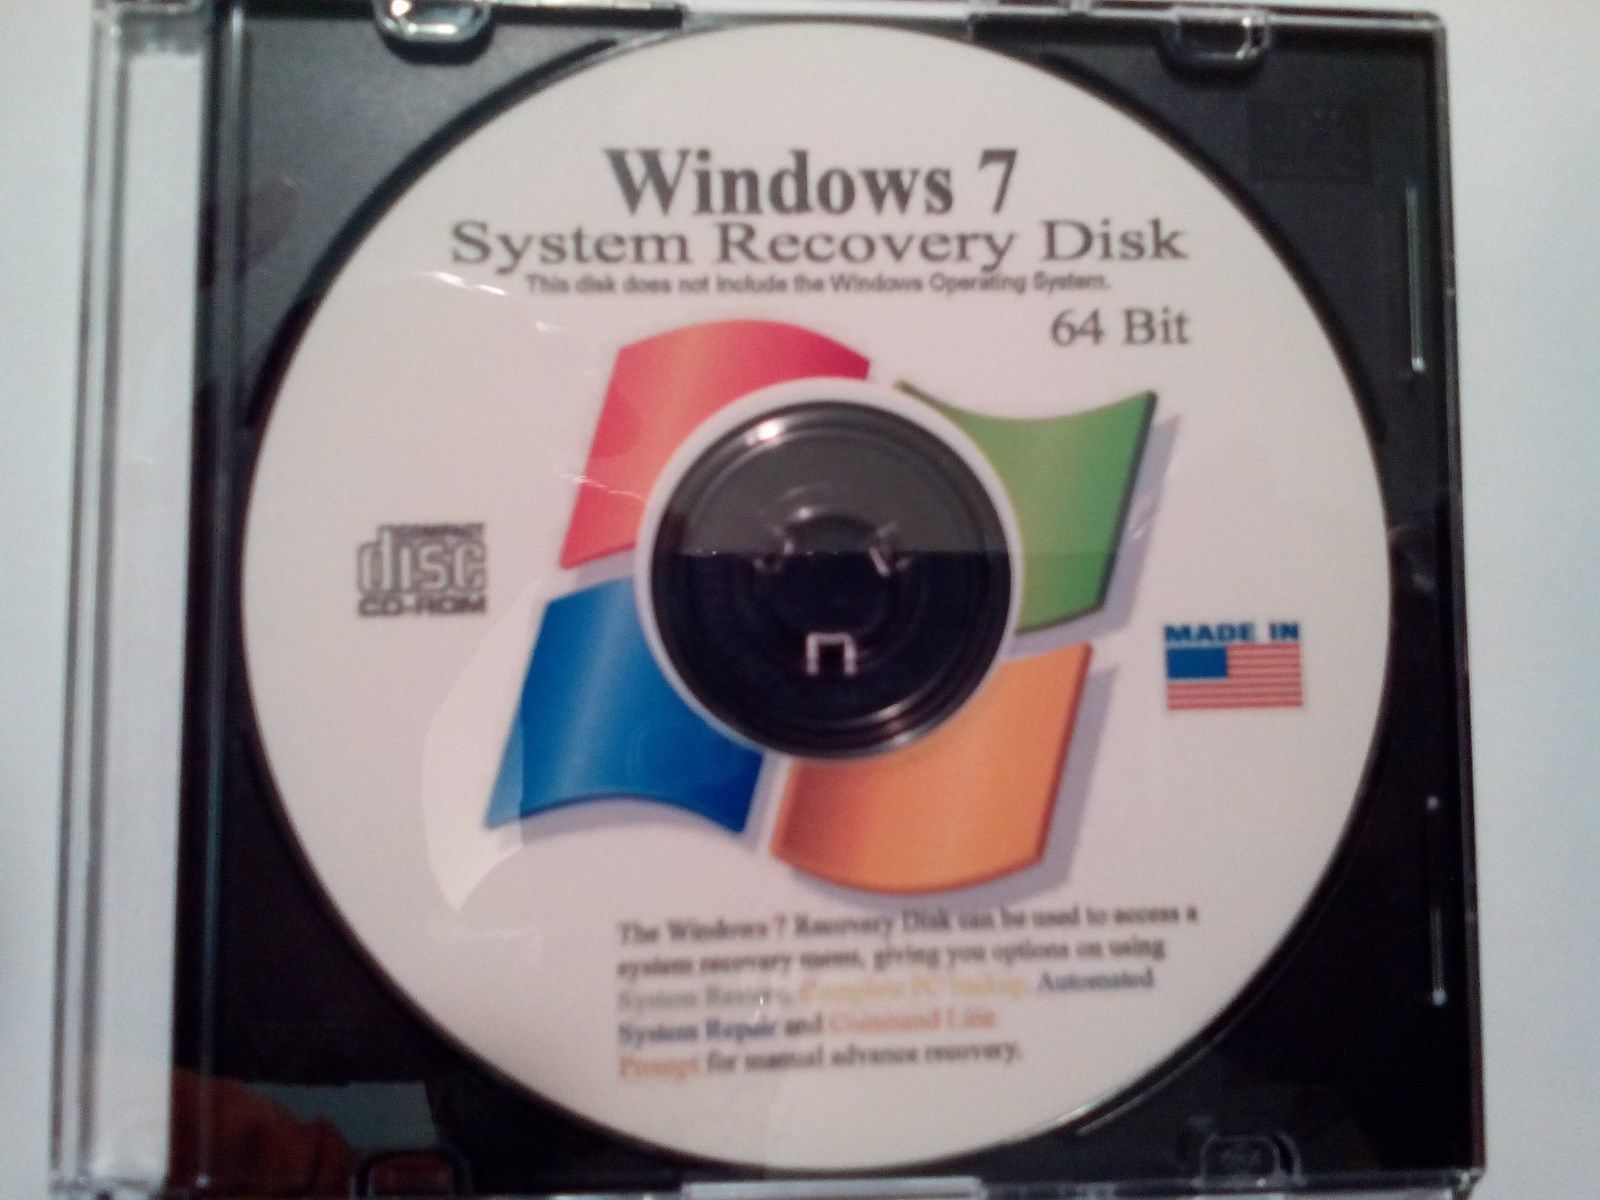 windows 7 startup repair disk iso download